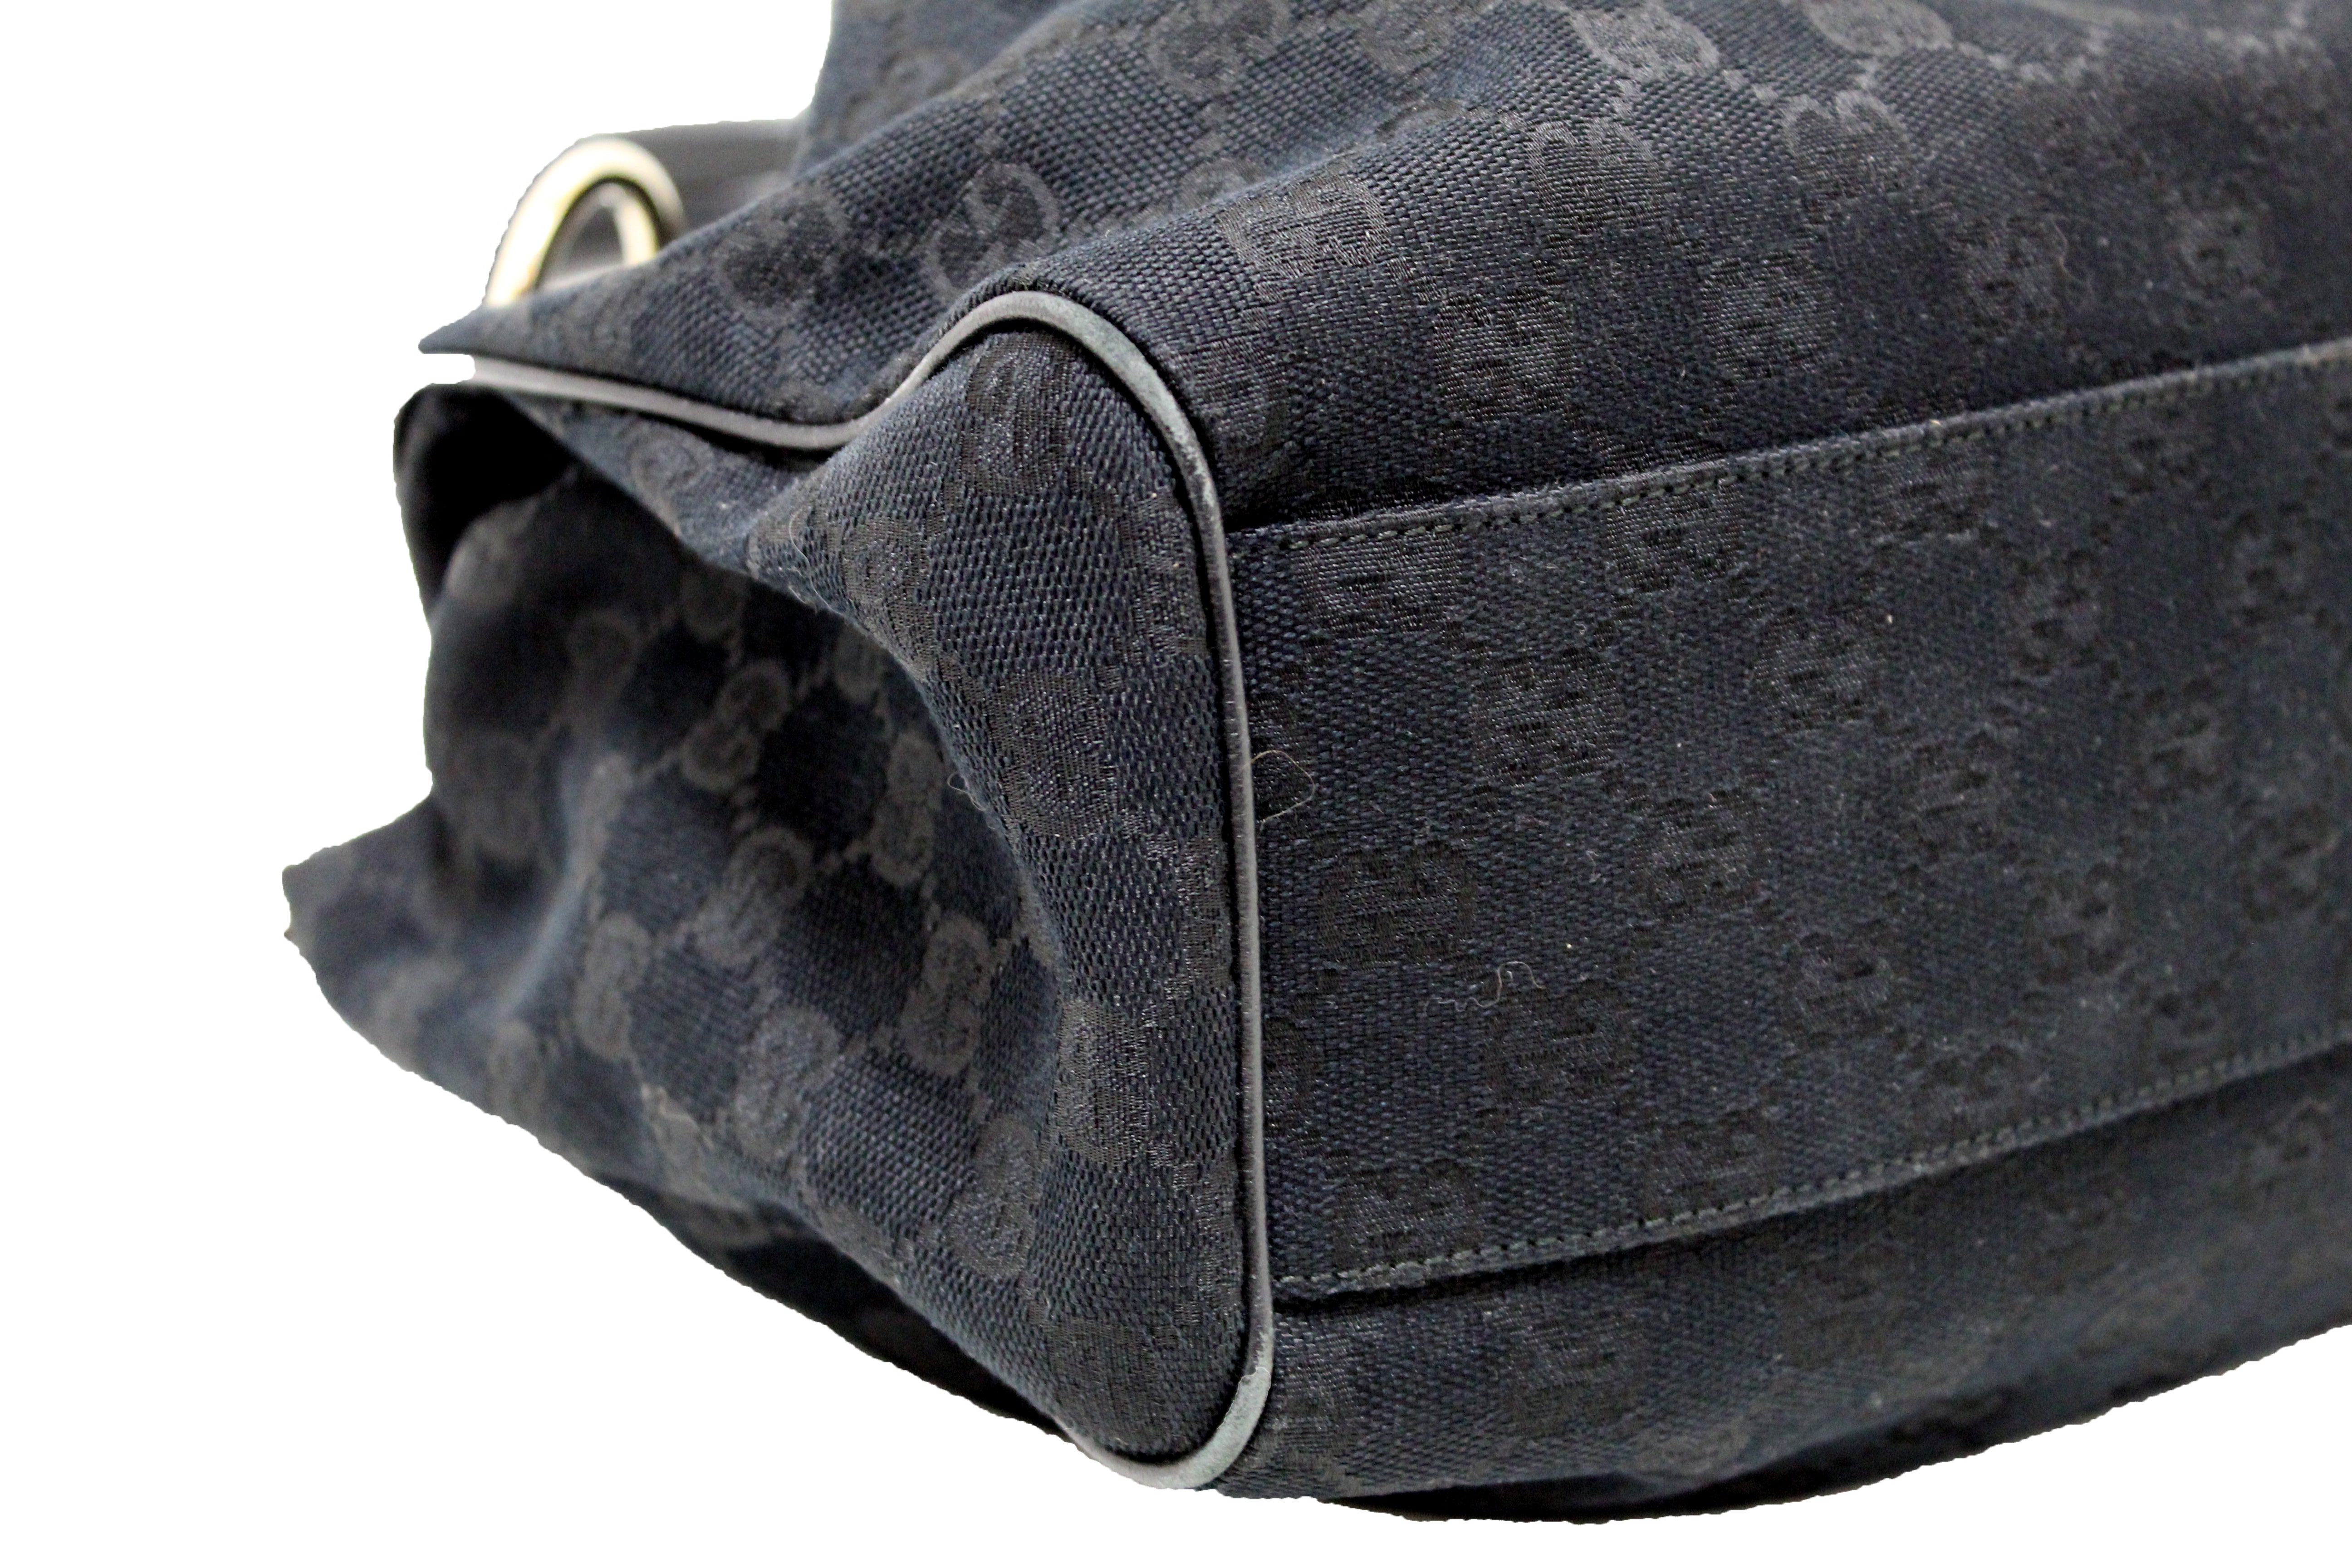 Authentic GUCCI GG Supreme Monogram Canvas Leather Tote Bag Hand Bag Gray  Black